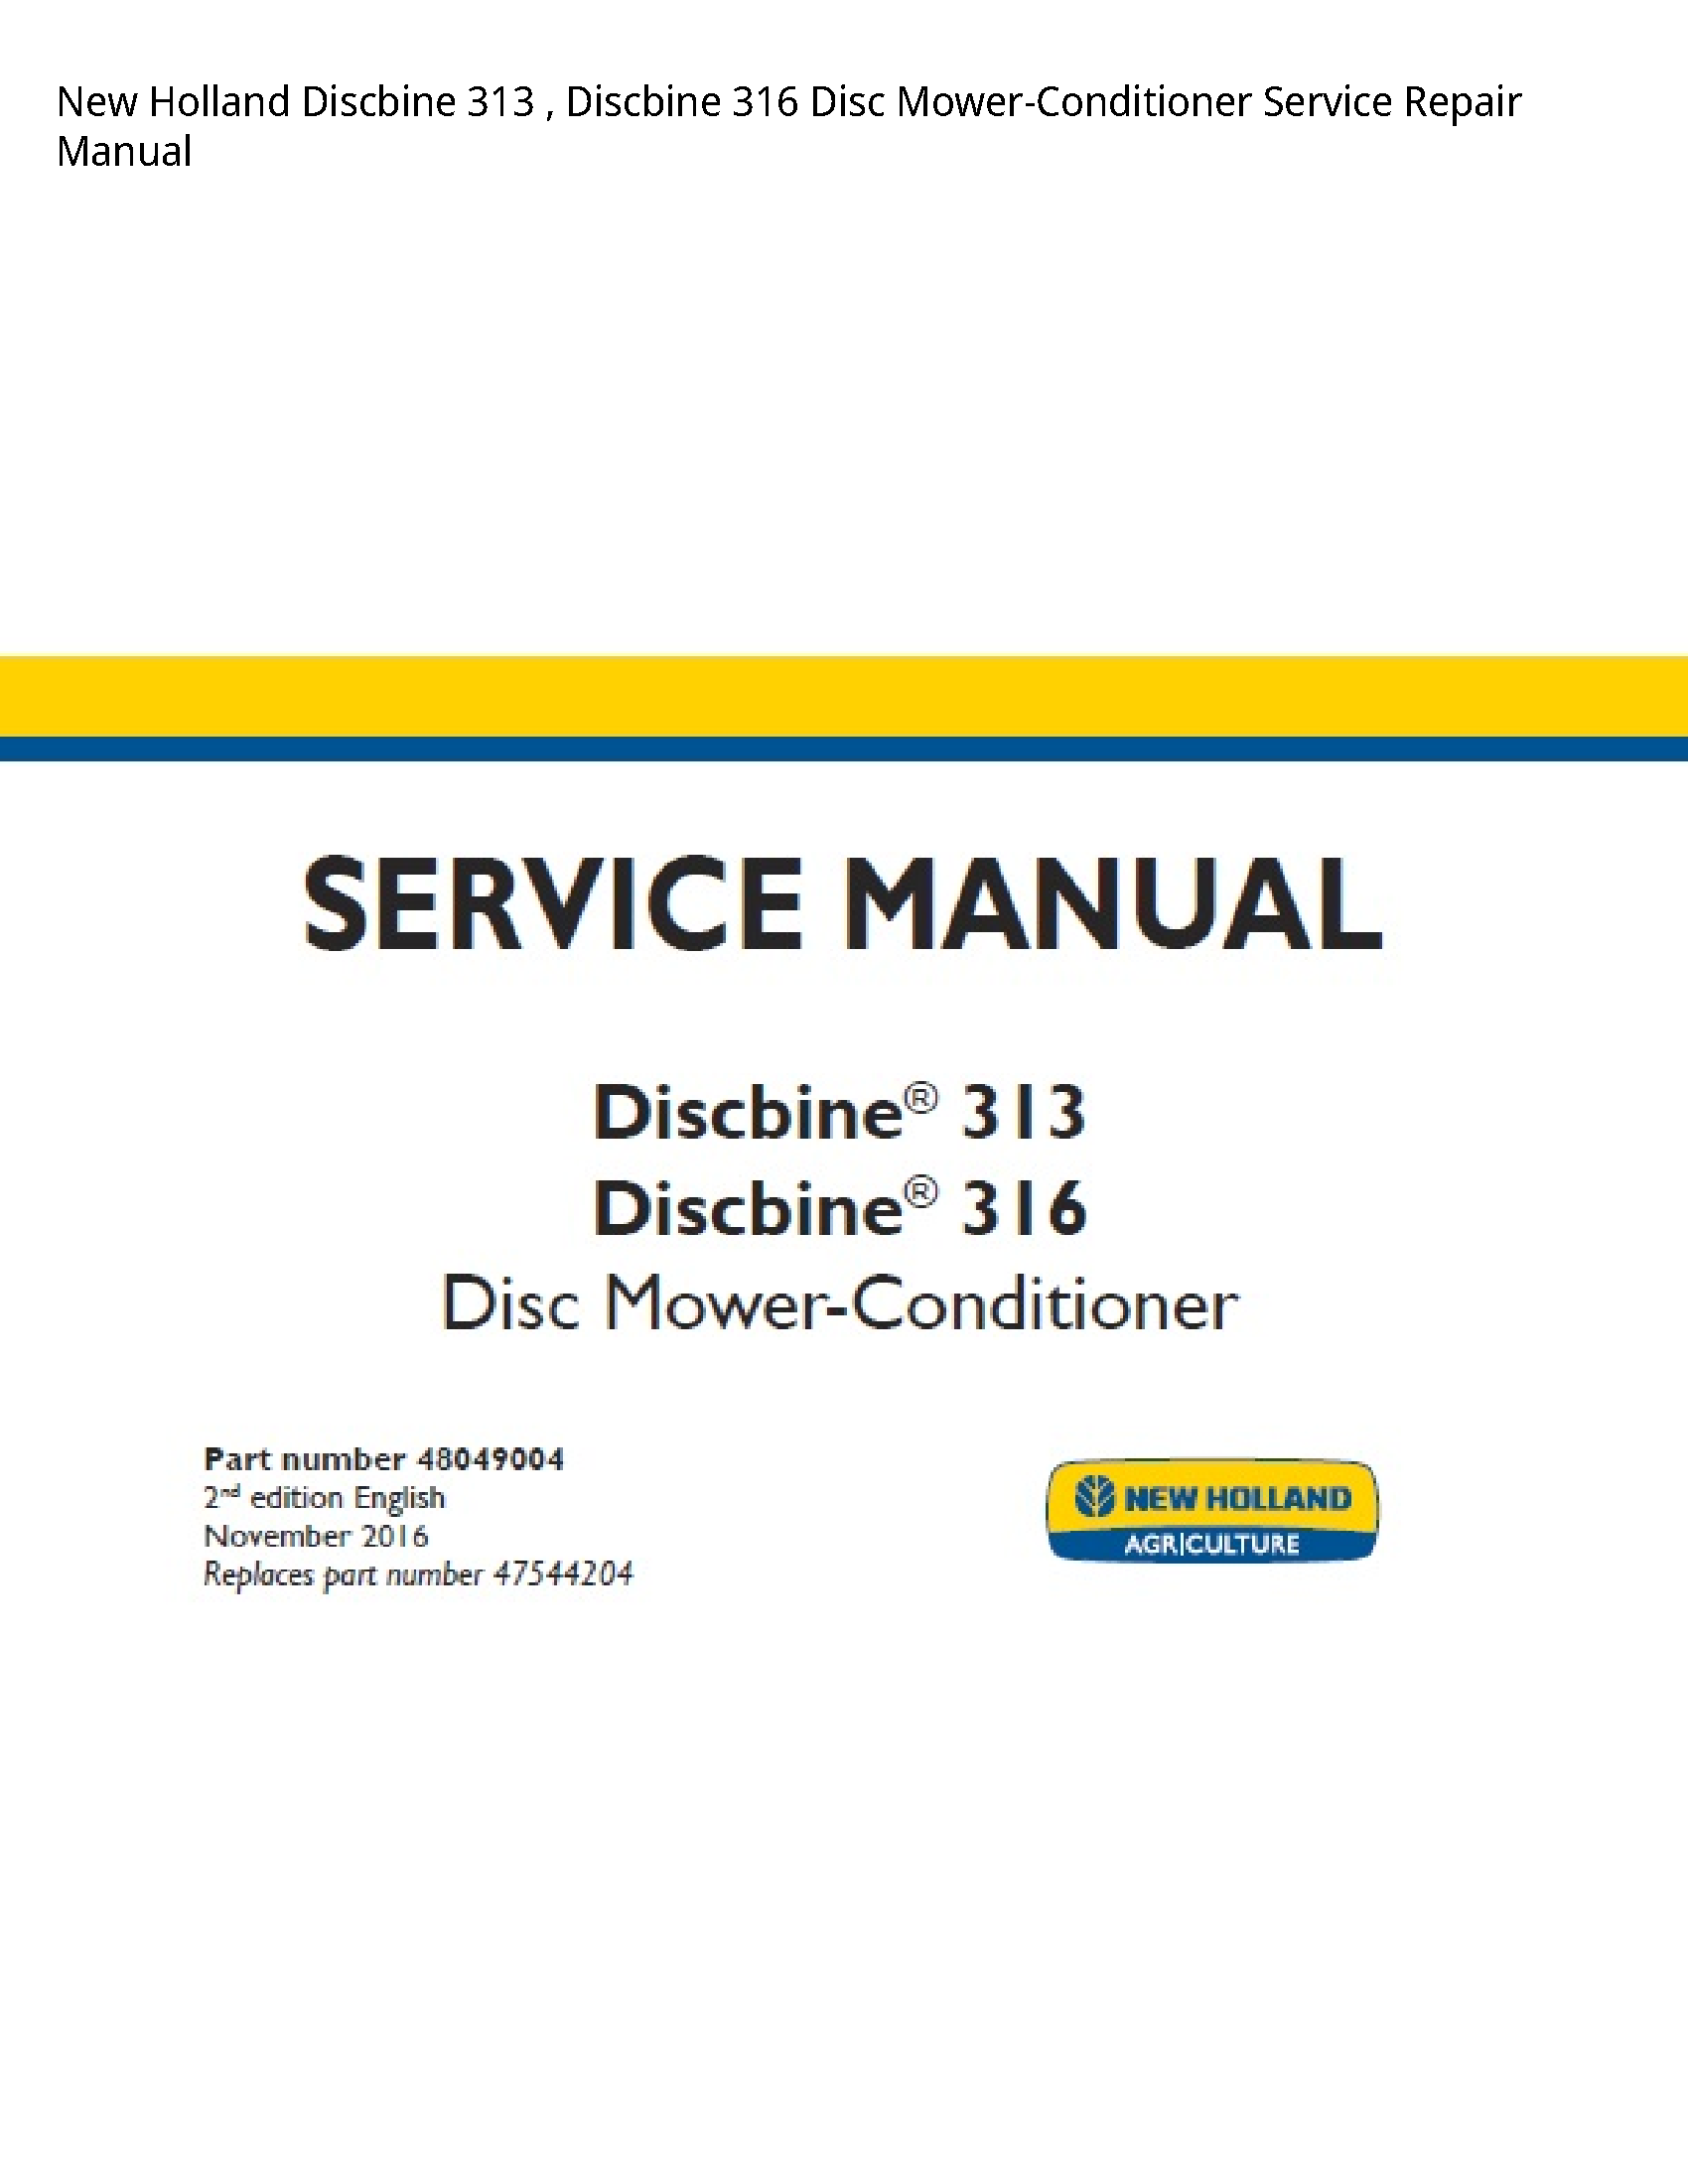 New Holland 313 Discbine Discbine Disc Mower-Conditioner manual